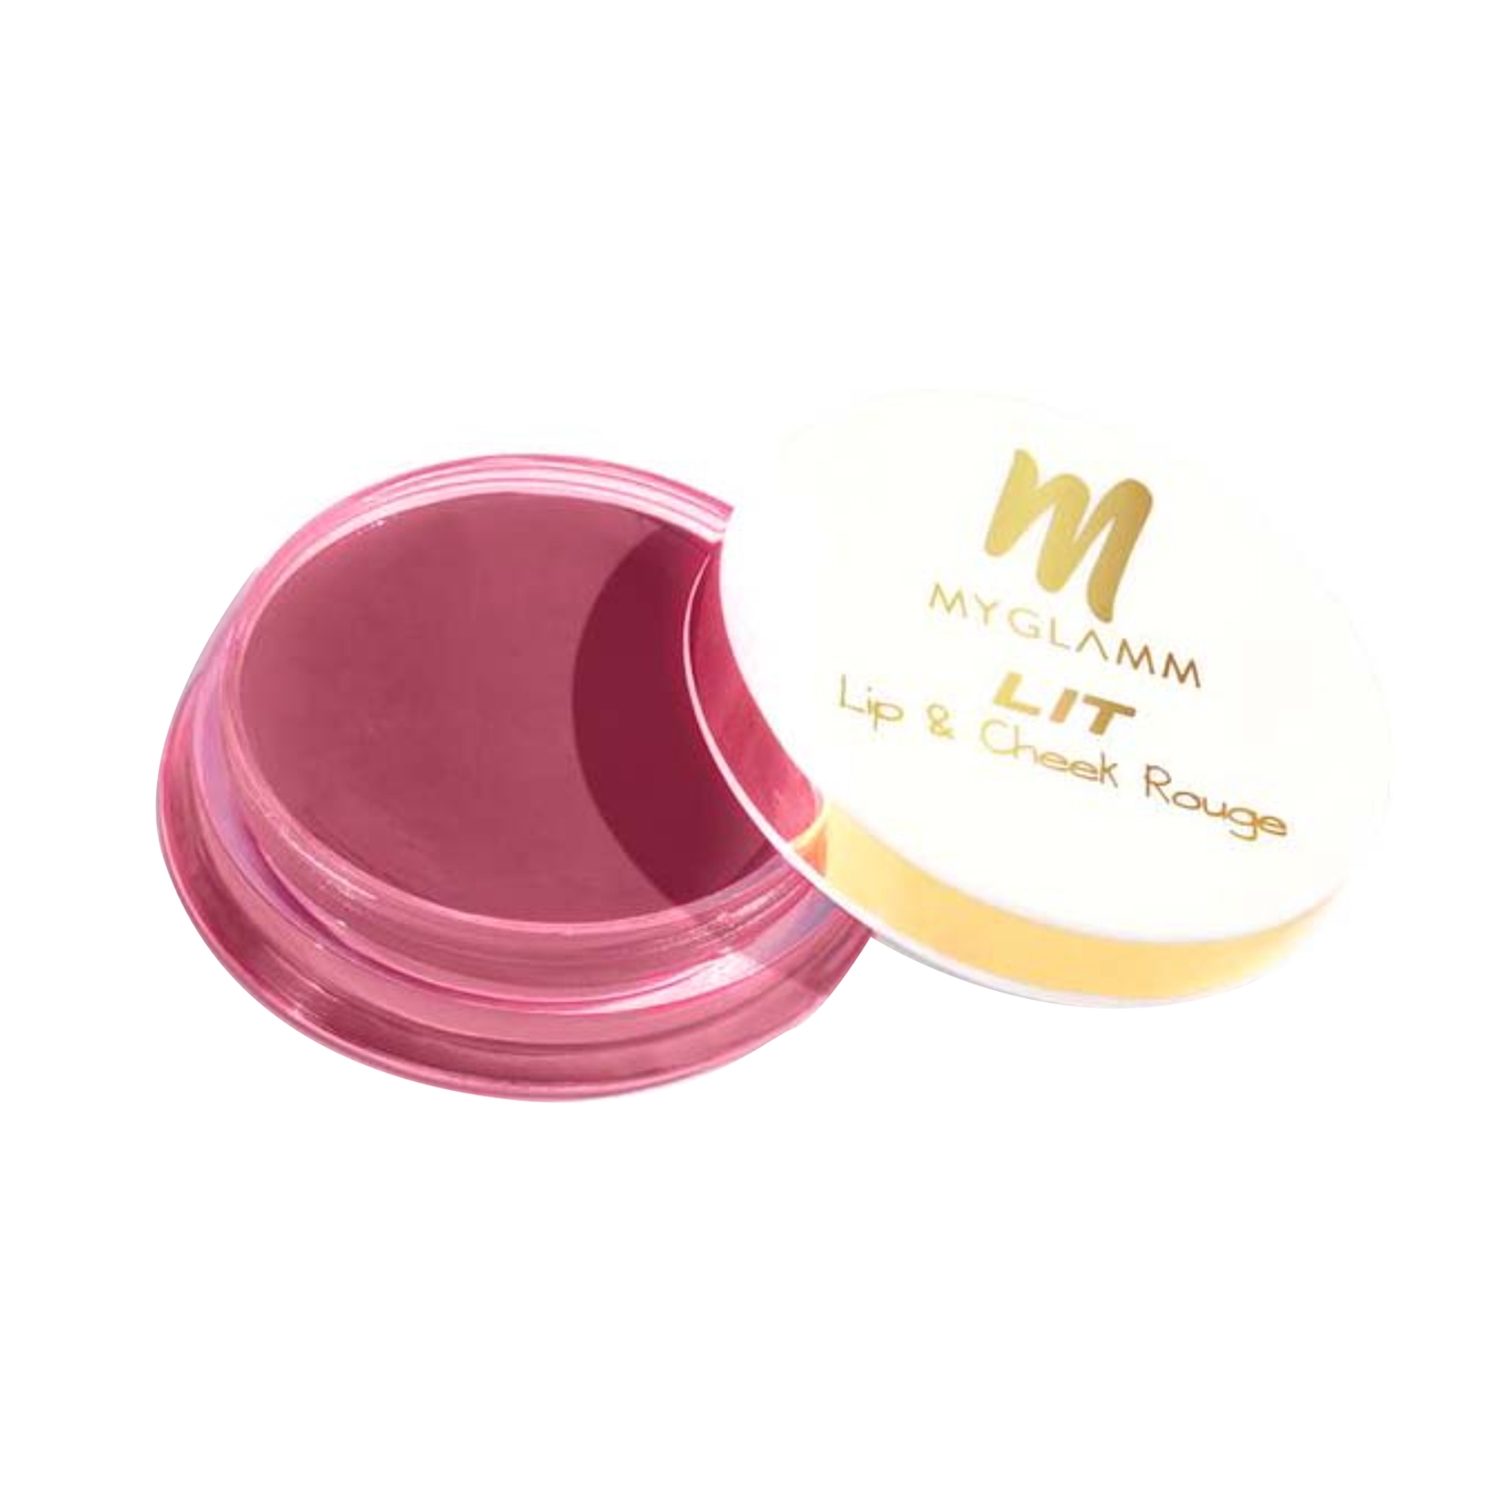 MyGlamm | MyGlamm Lip and Cheek Rouge - Berry Bliss (10g)